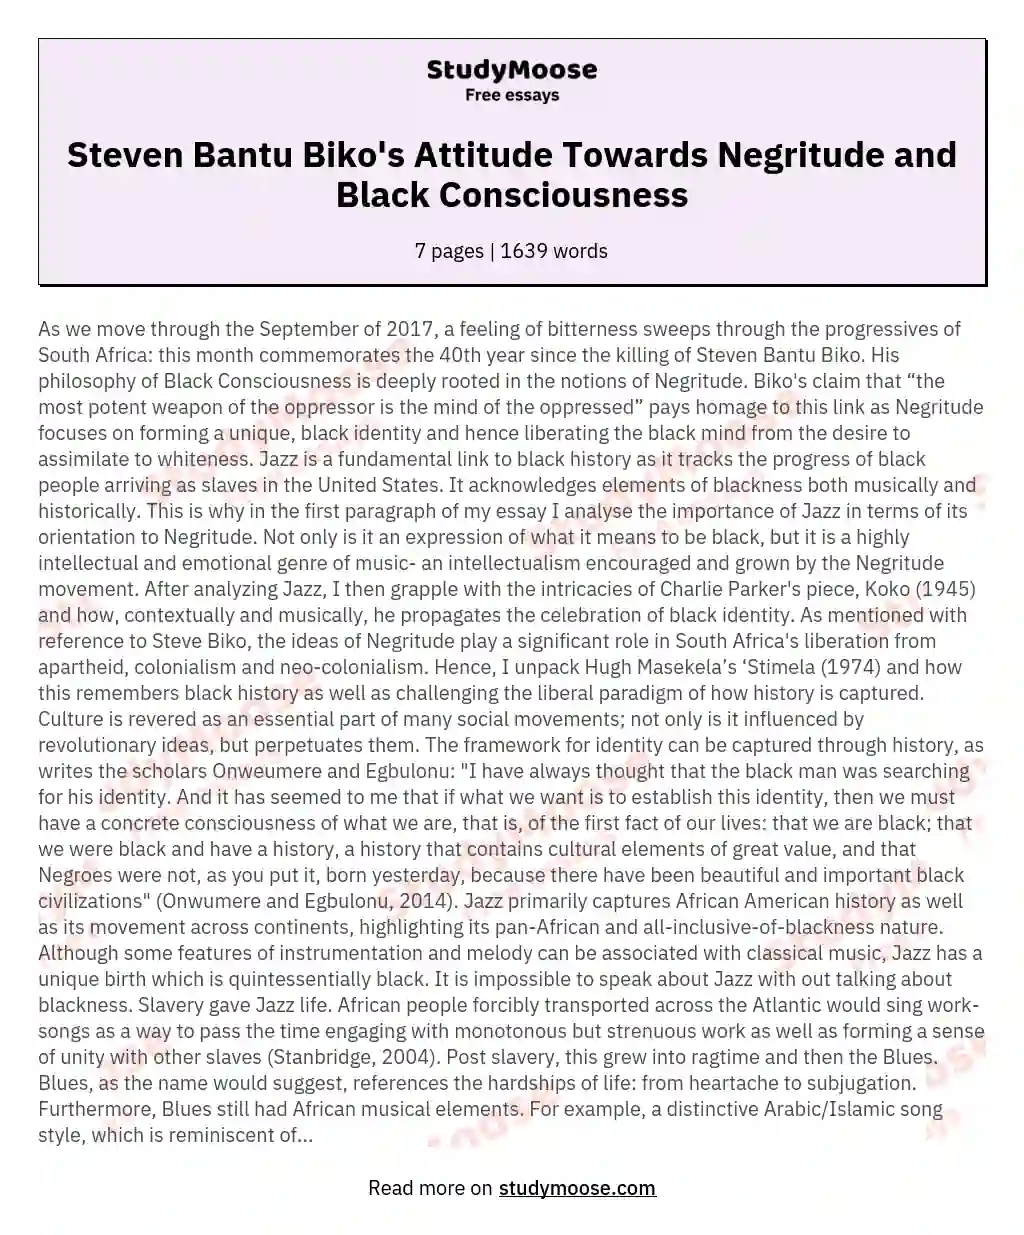 Steven Bantu Biko's Attitude Towards Negritude and Black Consciousness